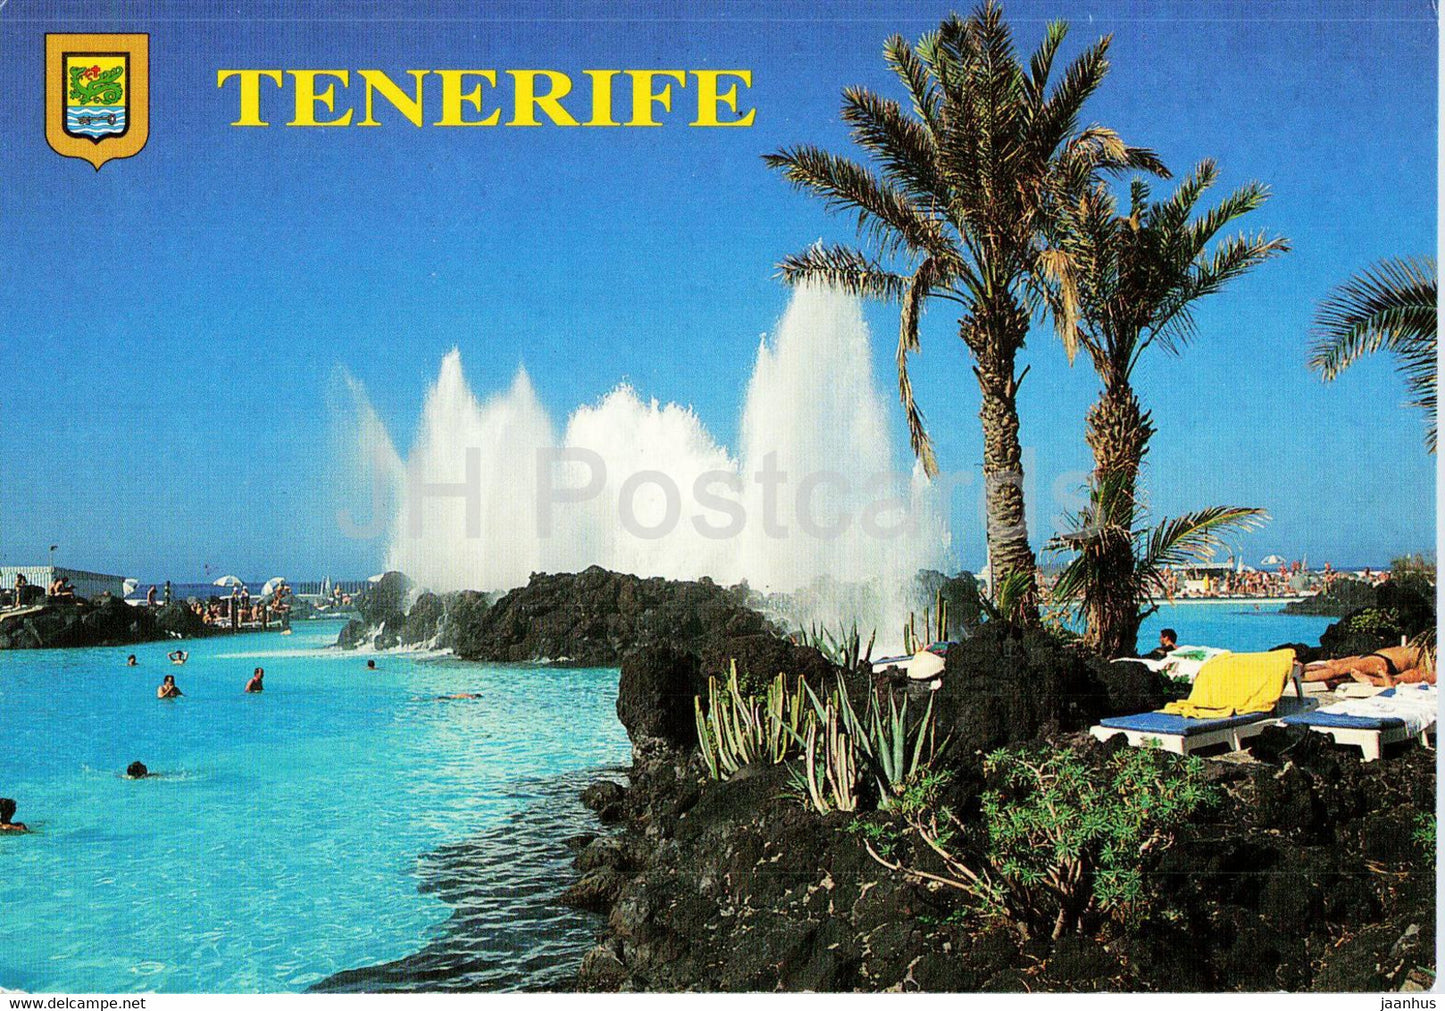 Puerto de la Cruz - Lago Martianez - lake - Tenerife - 1997 - Spain - used - JH Postcards